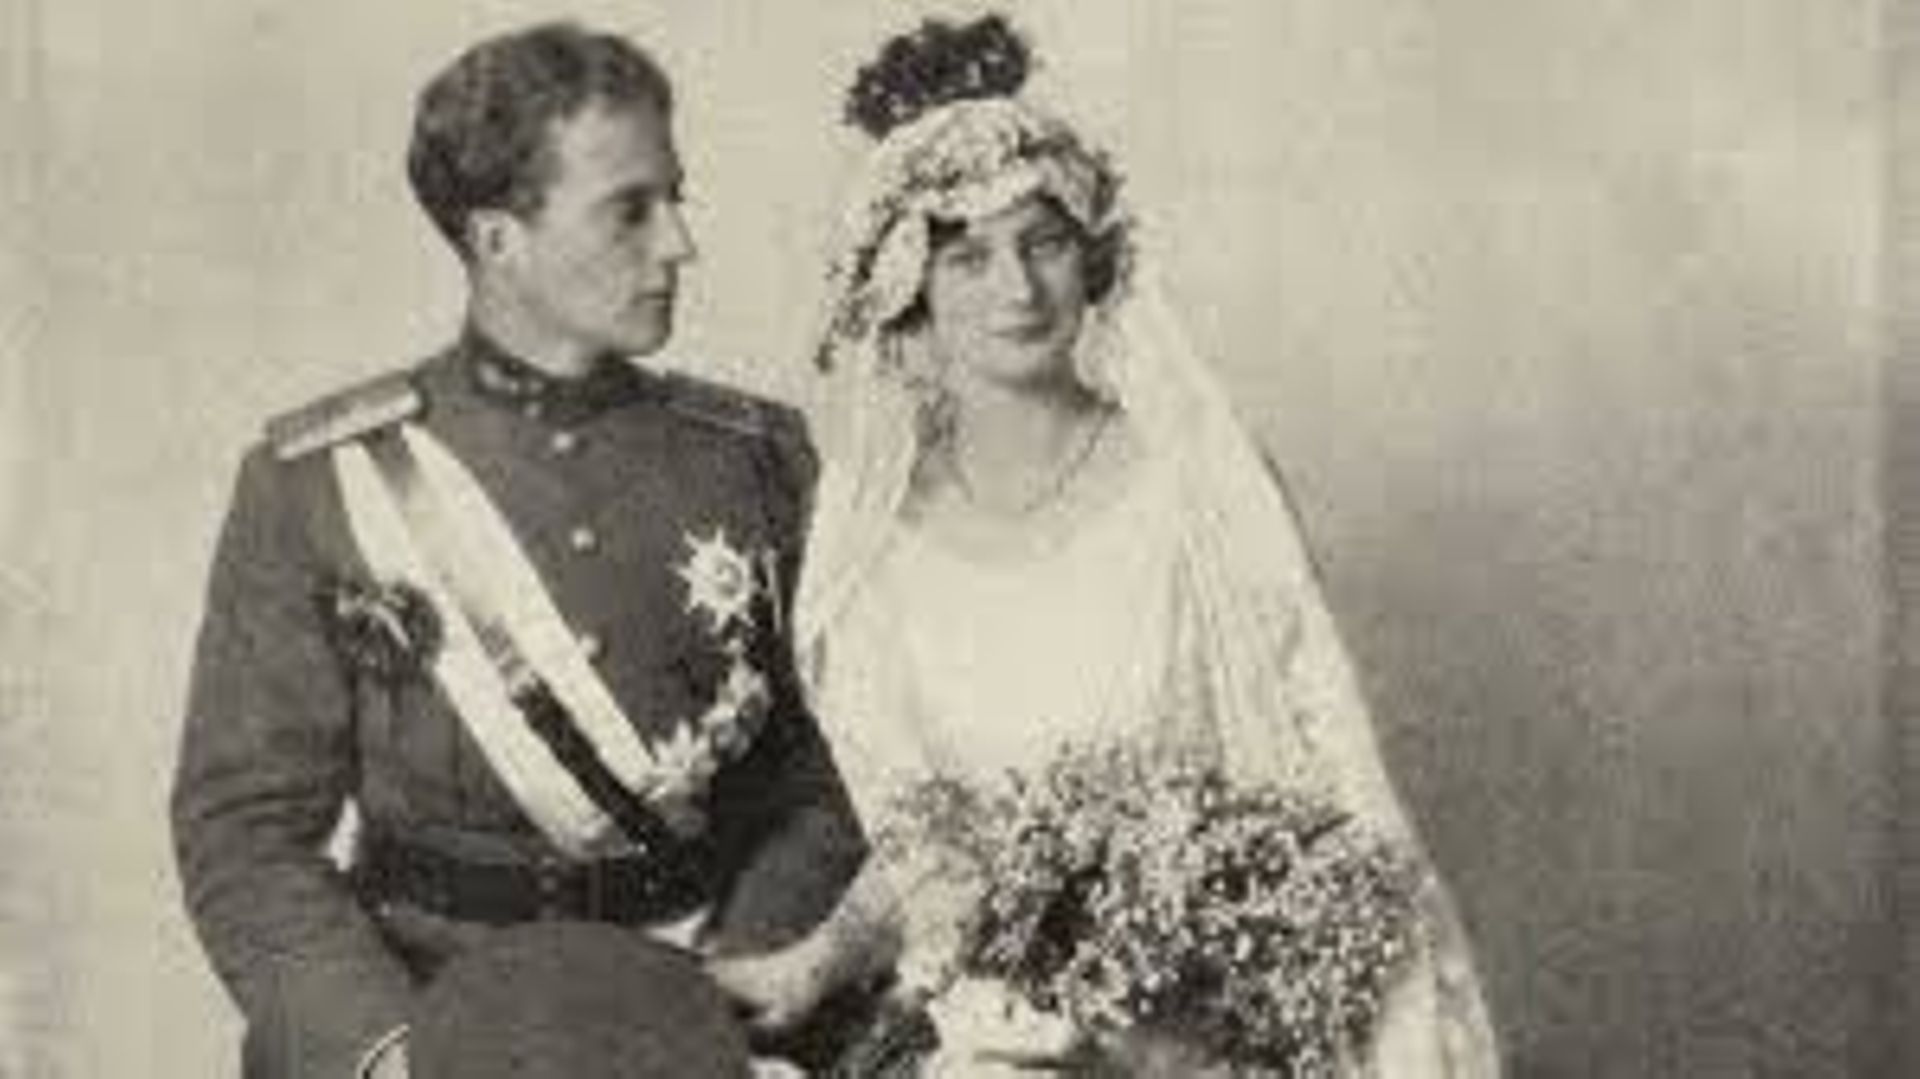 Mariage de Léopold III et de la Reine Astrid